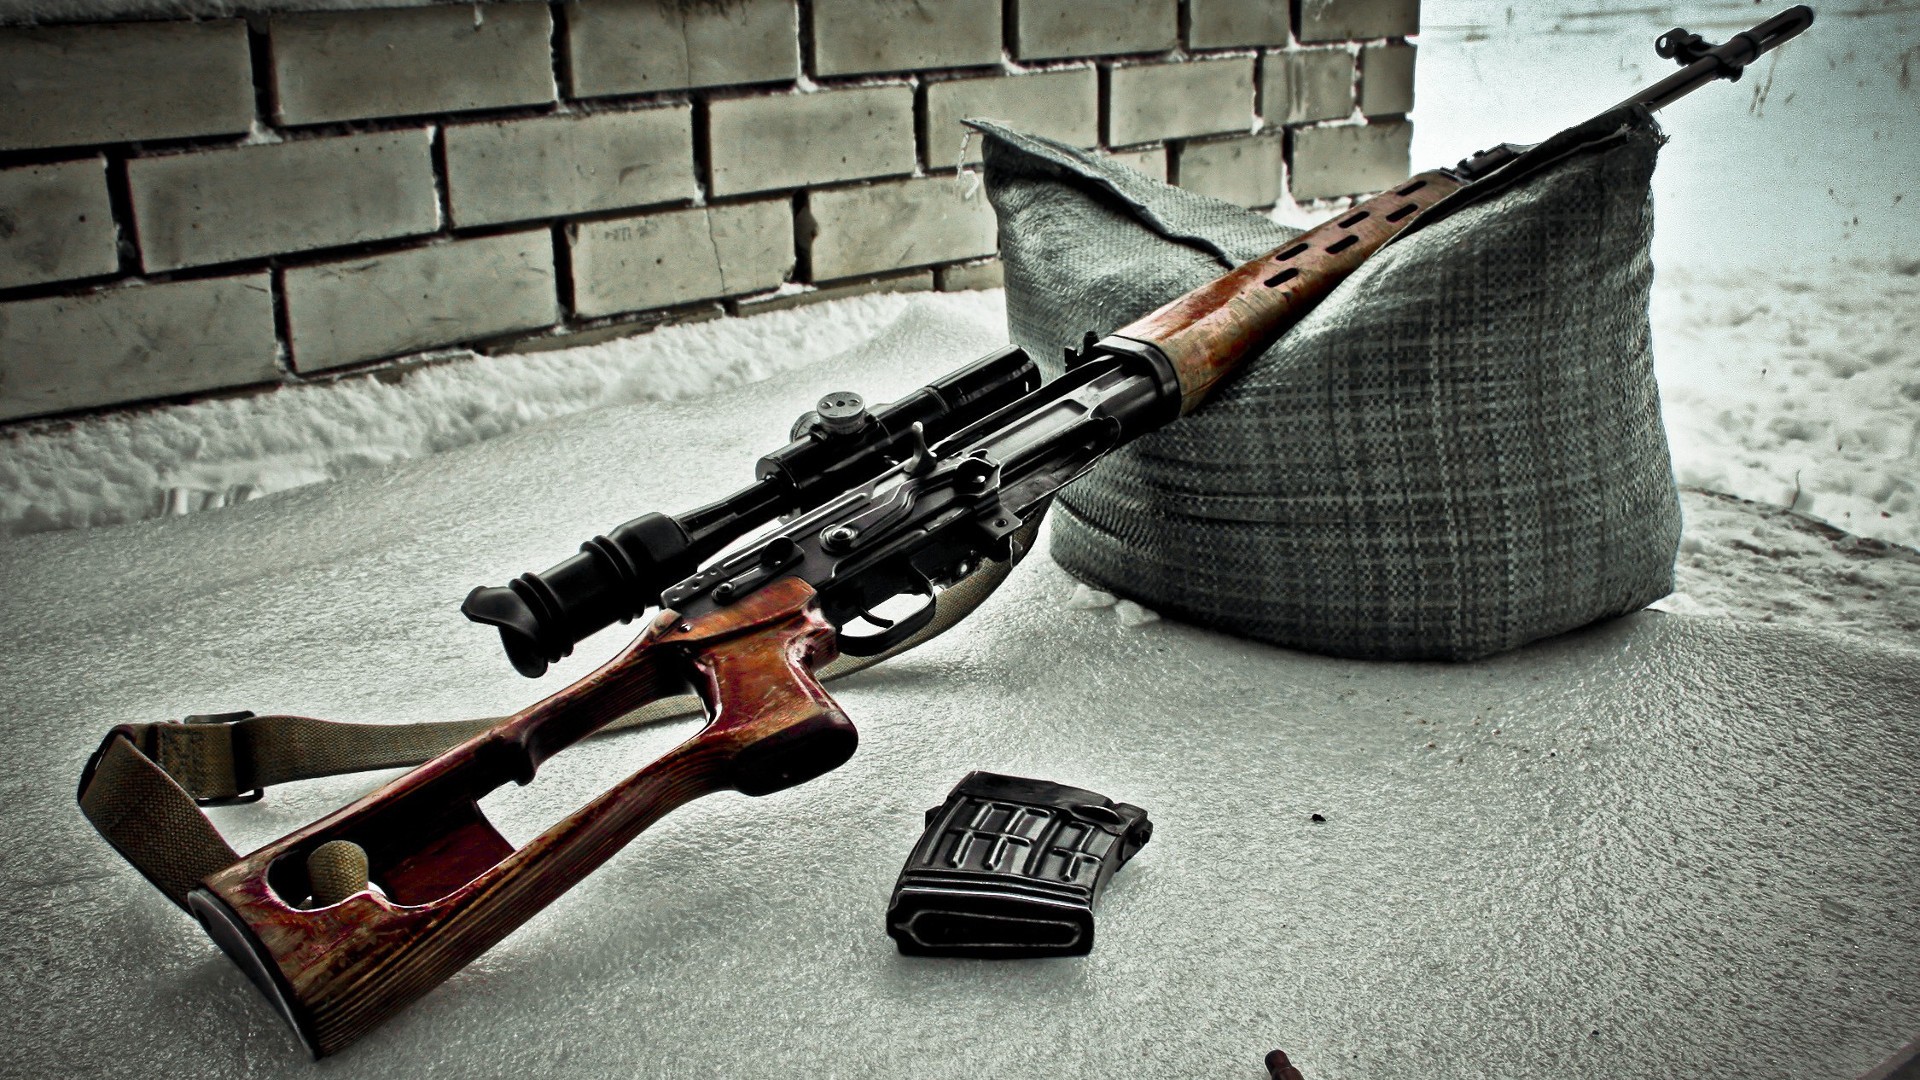 General 1920x1080 gun sniper rifle rifles Dragunov weapon Russian/Soviet firearms